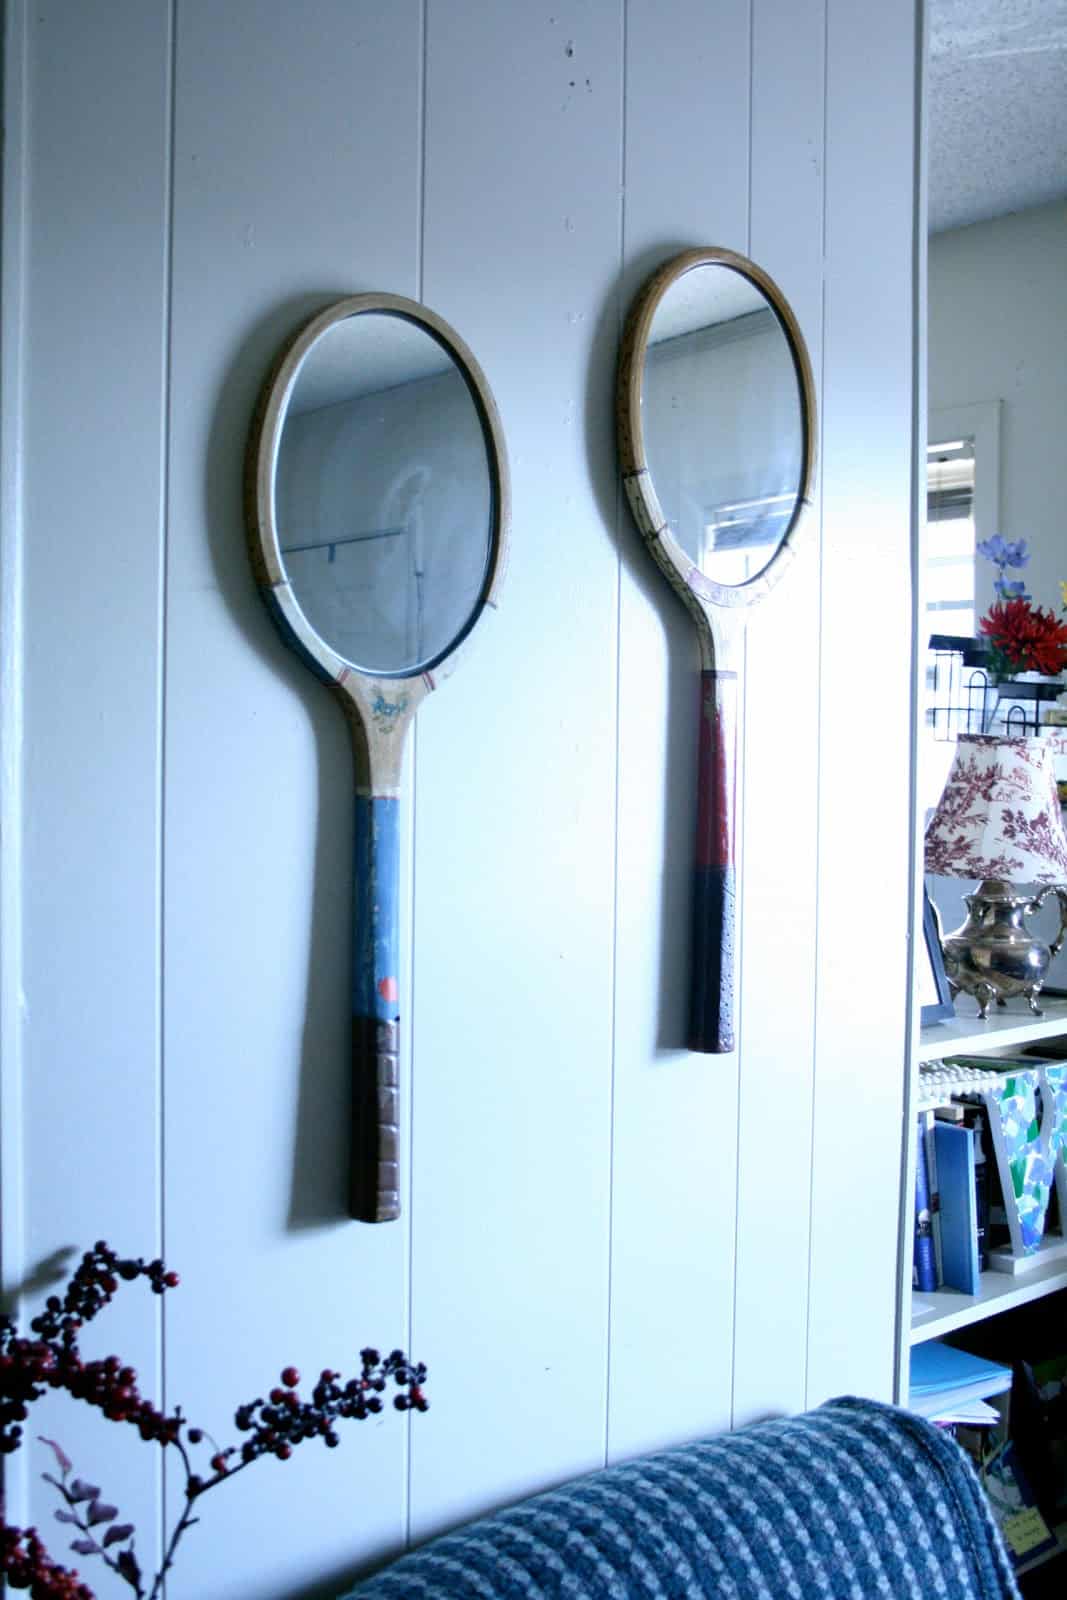 Tennis racket mirrors